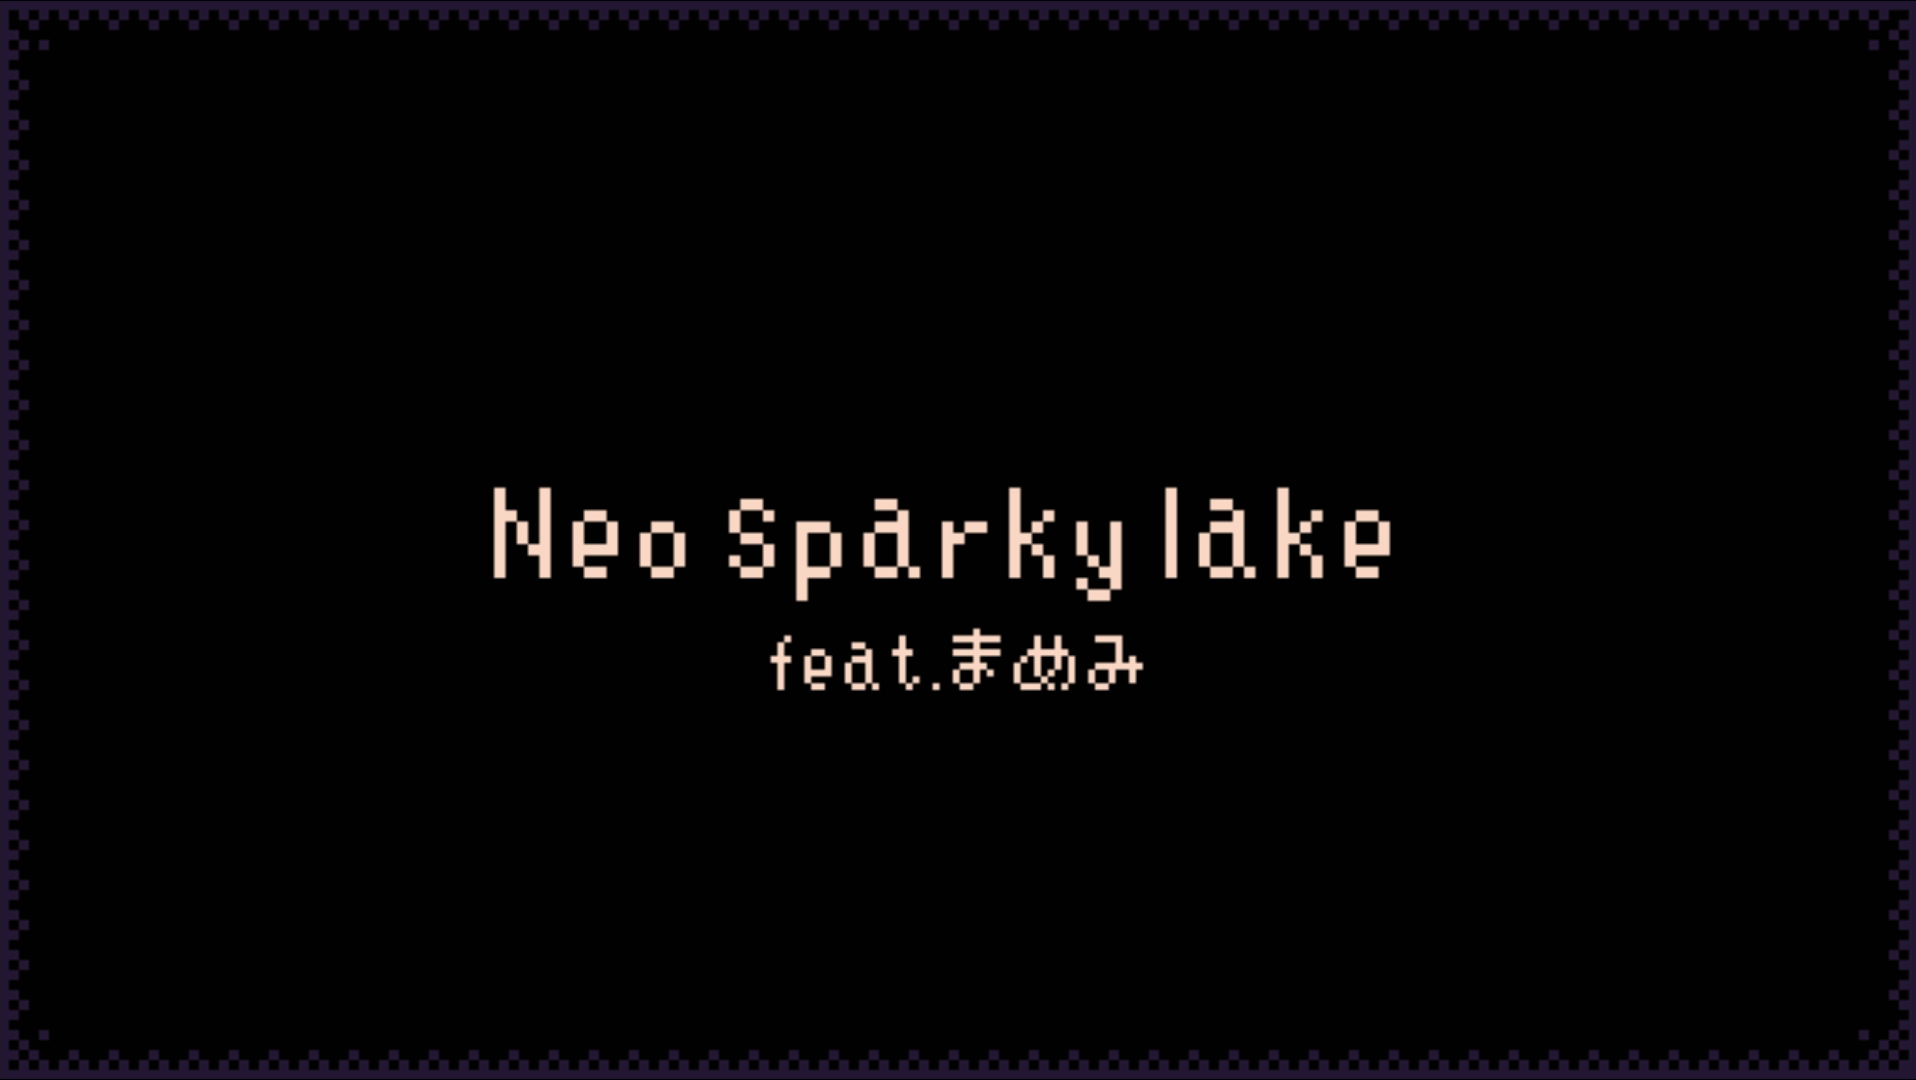 [MV] Neo sparky lake / キリト feat. まめみ